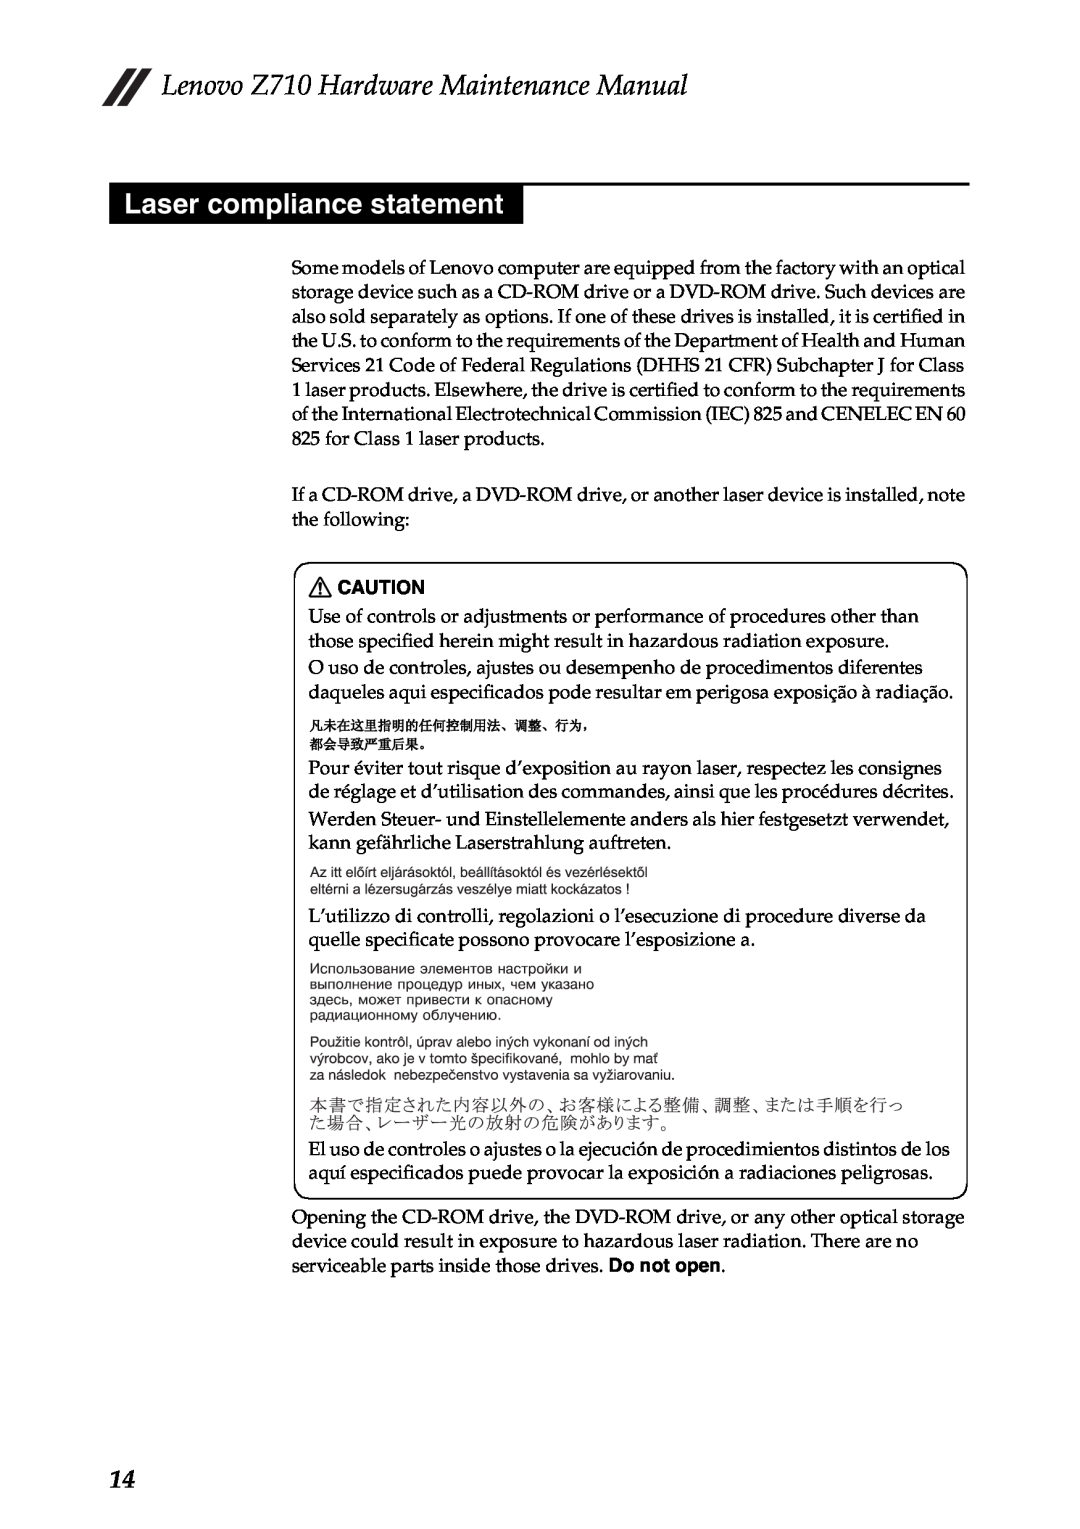 Lenovo manual Laser compliance statement, Lenovo Z710 Hardware Maintenance Manual 